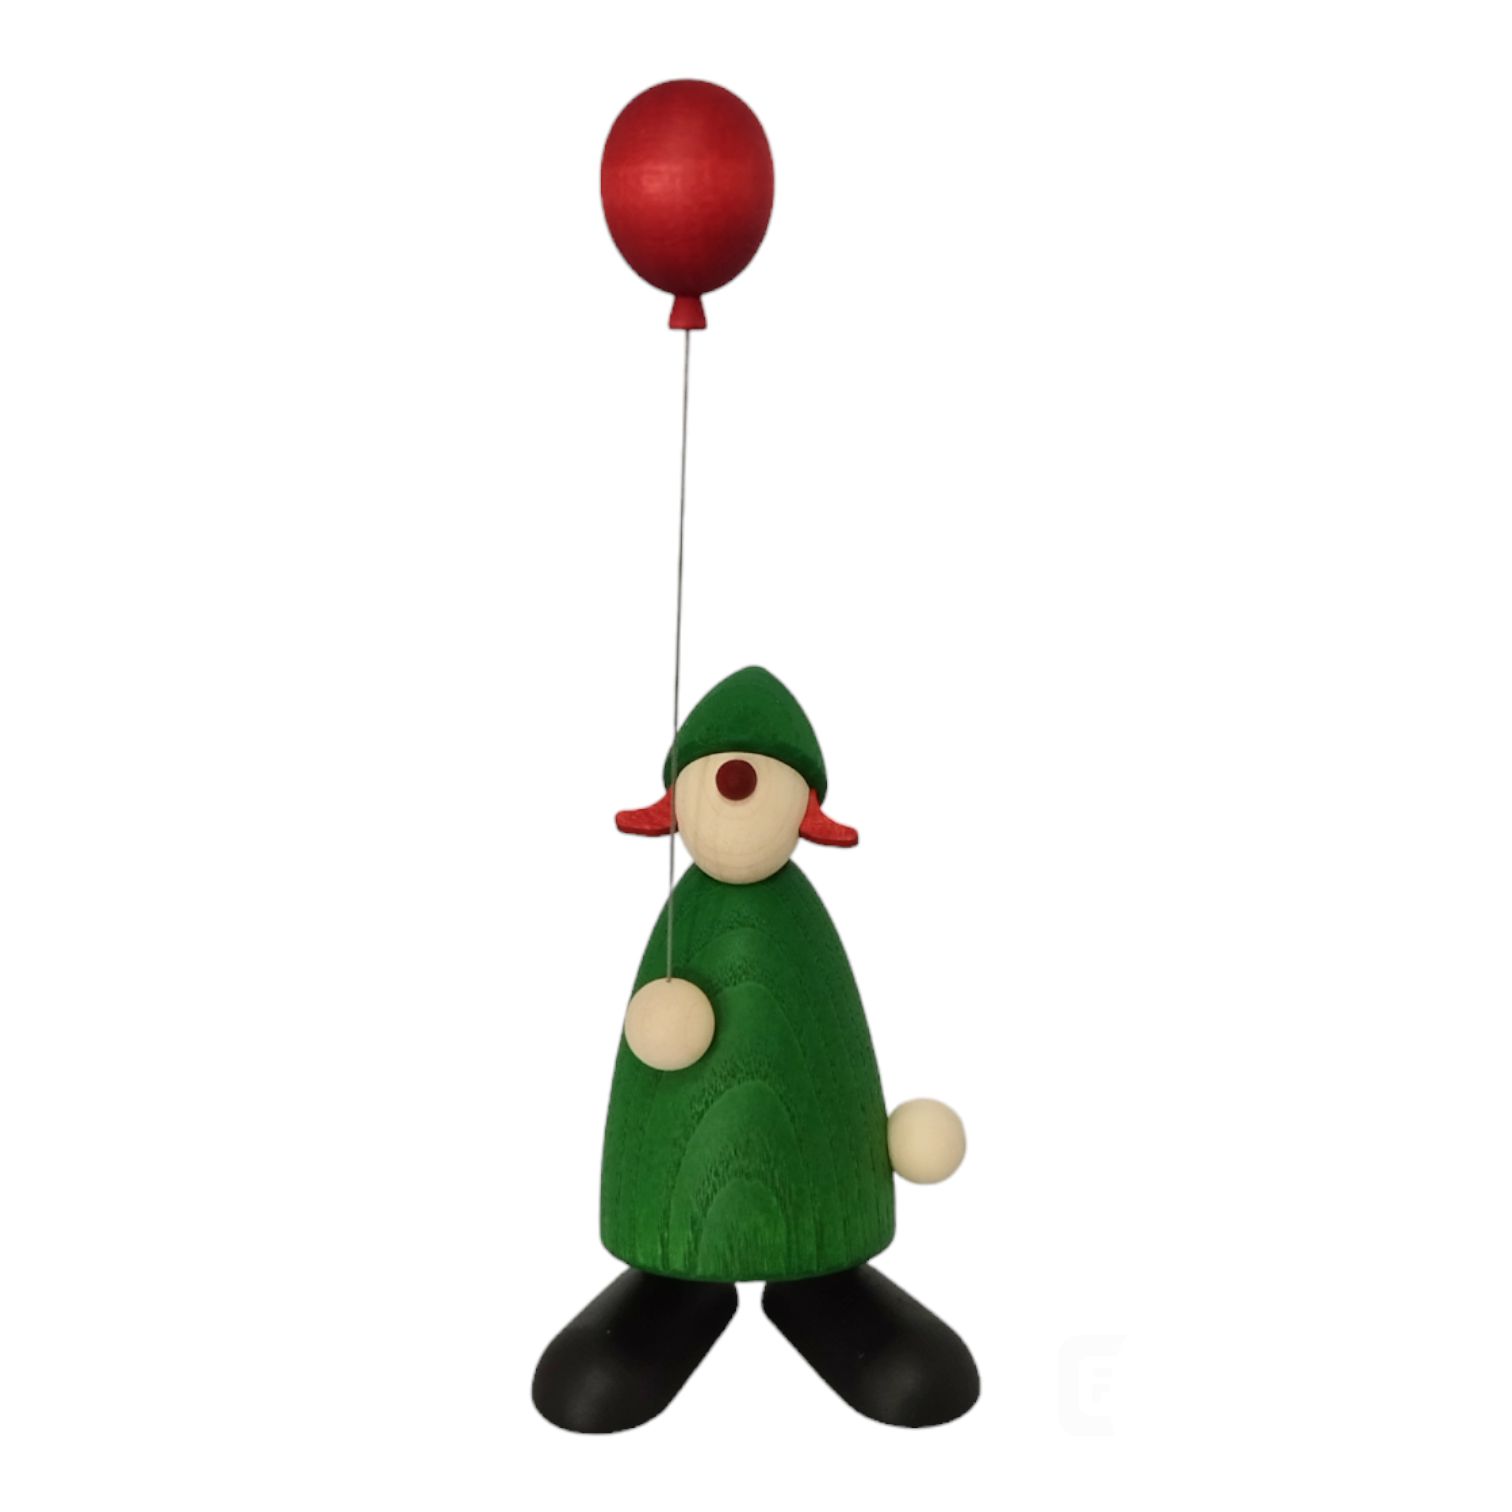 Gratulantin Lina mit rotem Luftballon